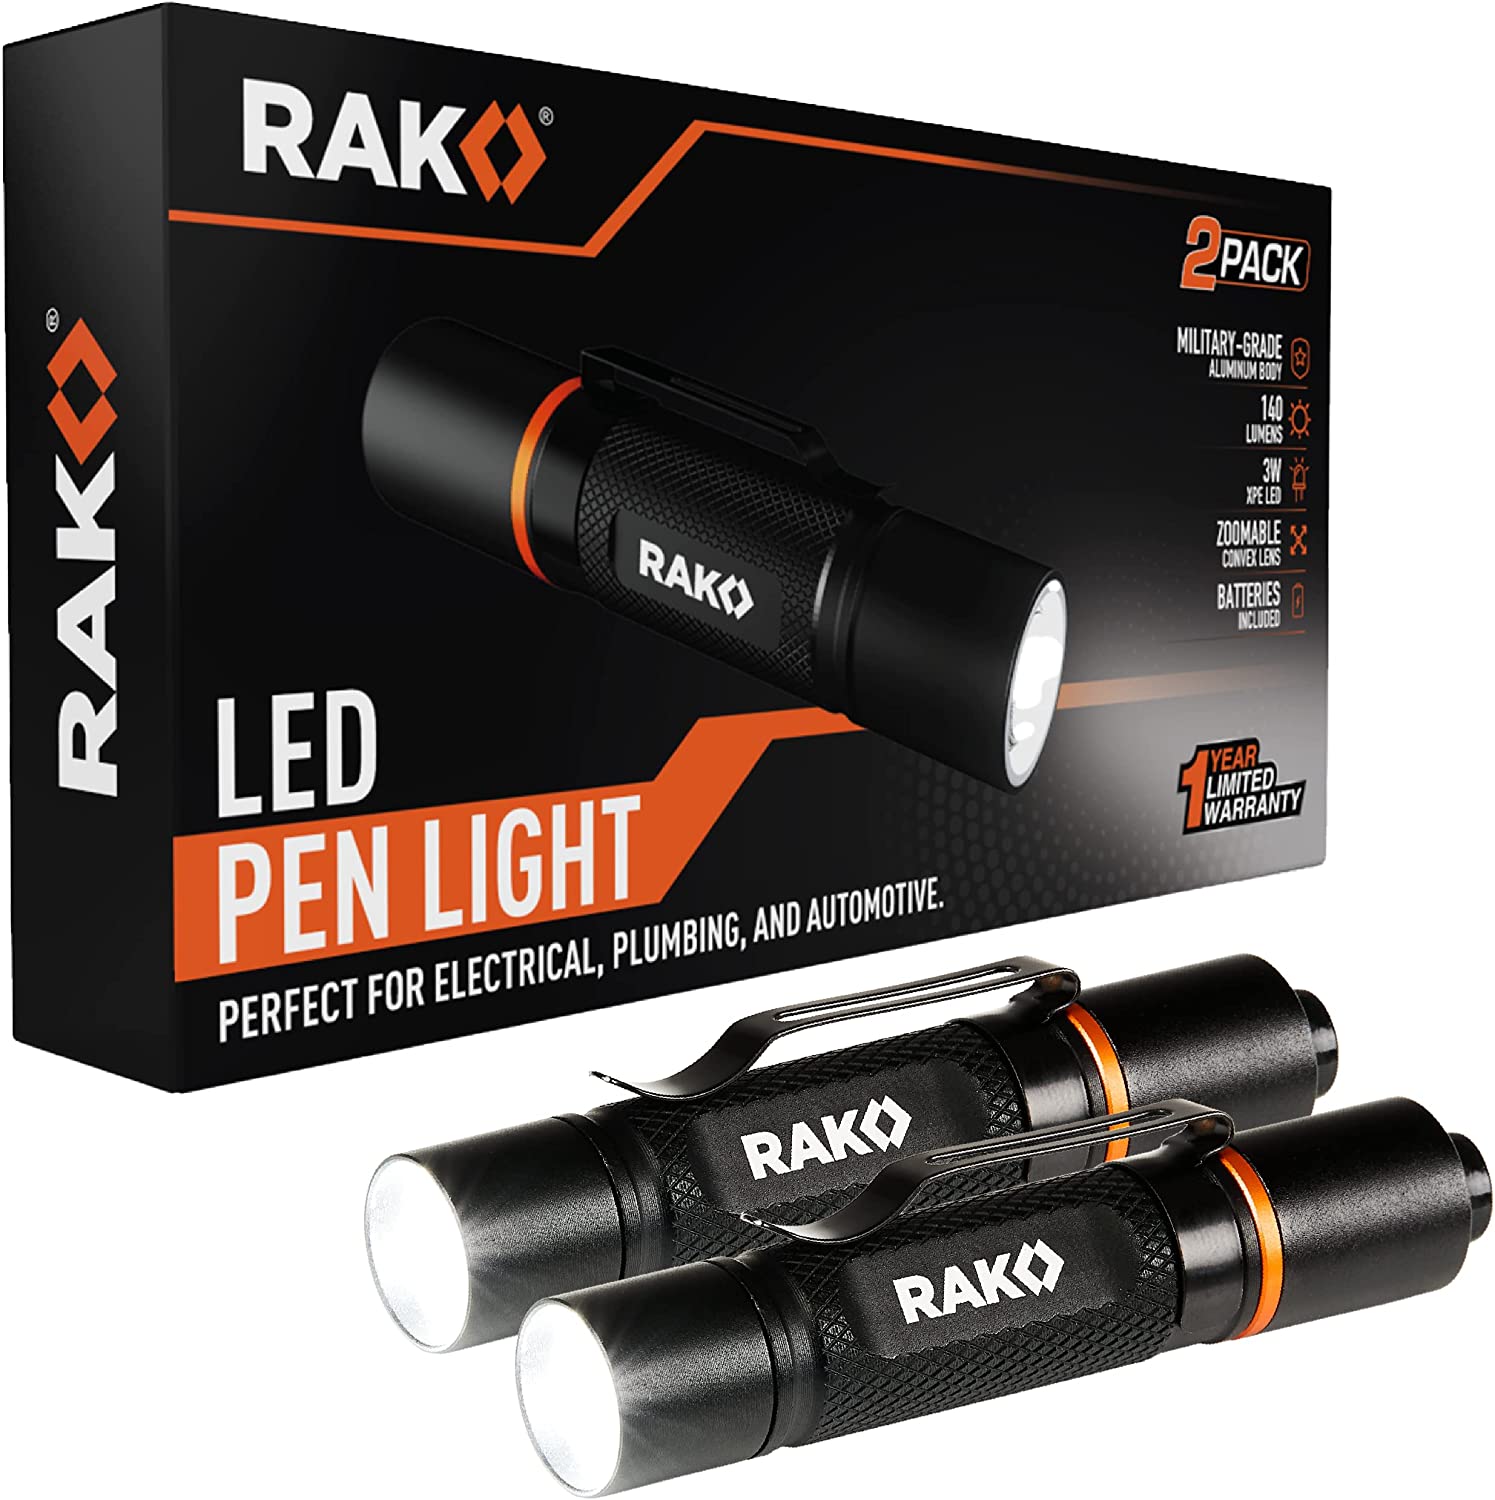 2-Pack Rak Pro Tools 140 Lumen Pocket Pen Flashlights $7.50 + Free Shipping w/ Prime or on $25+